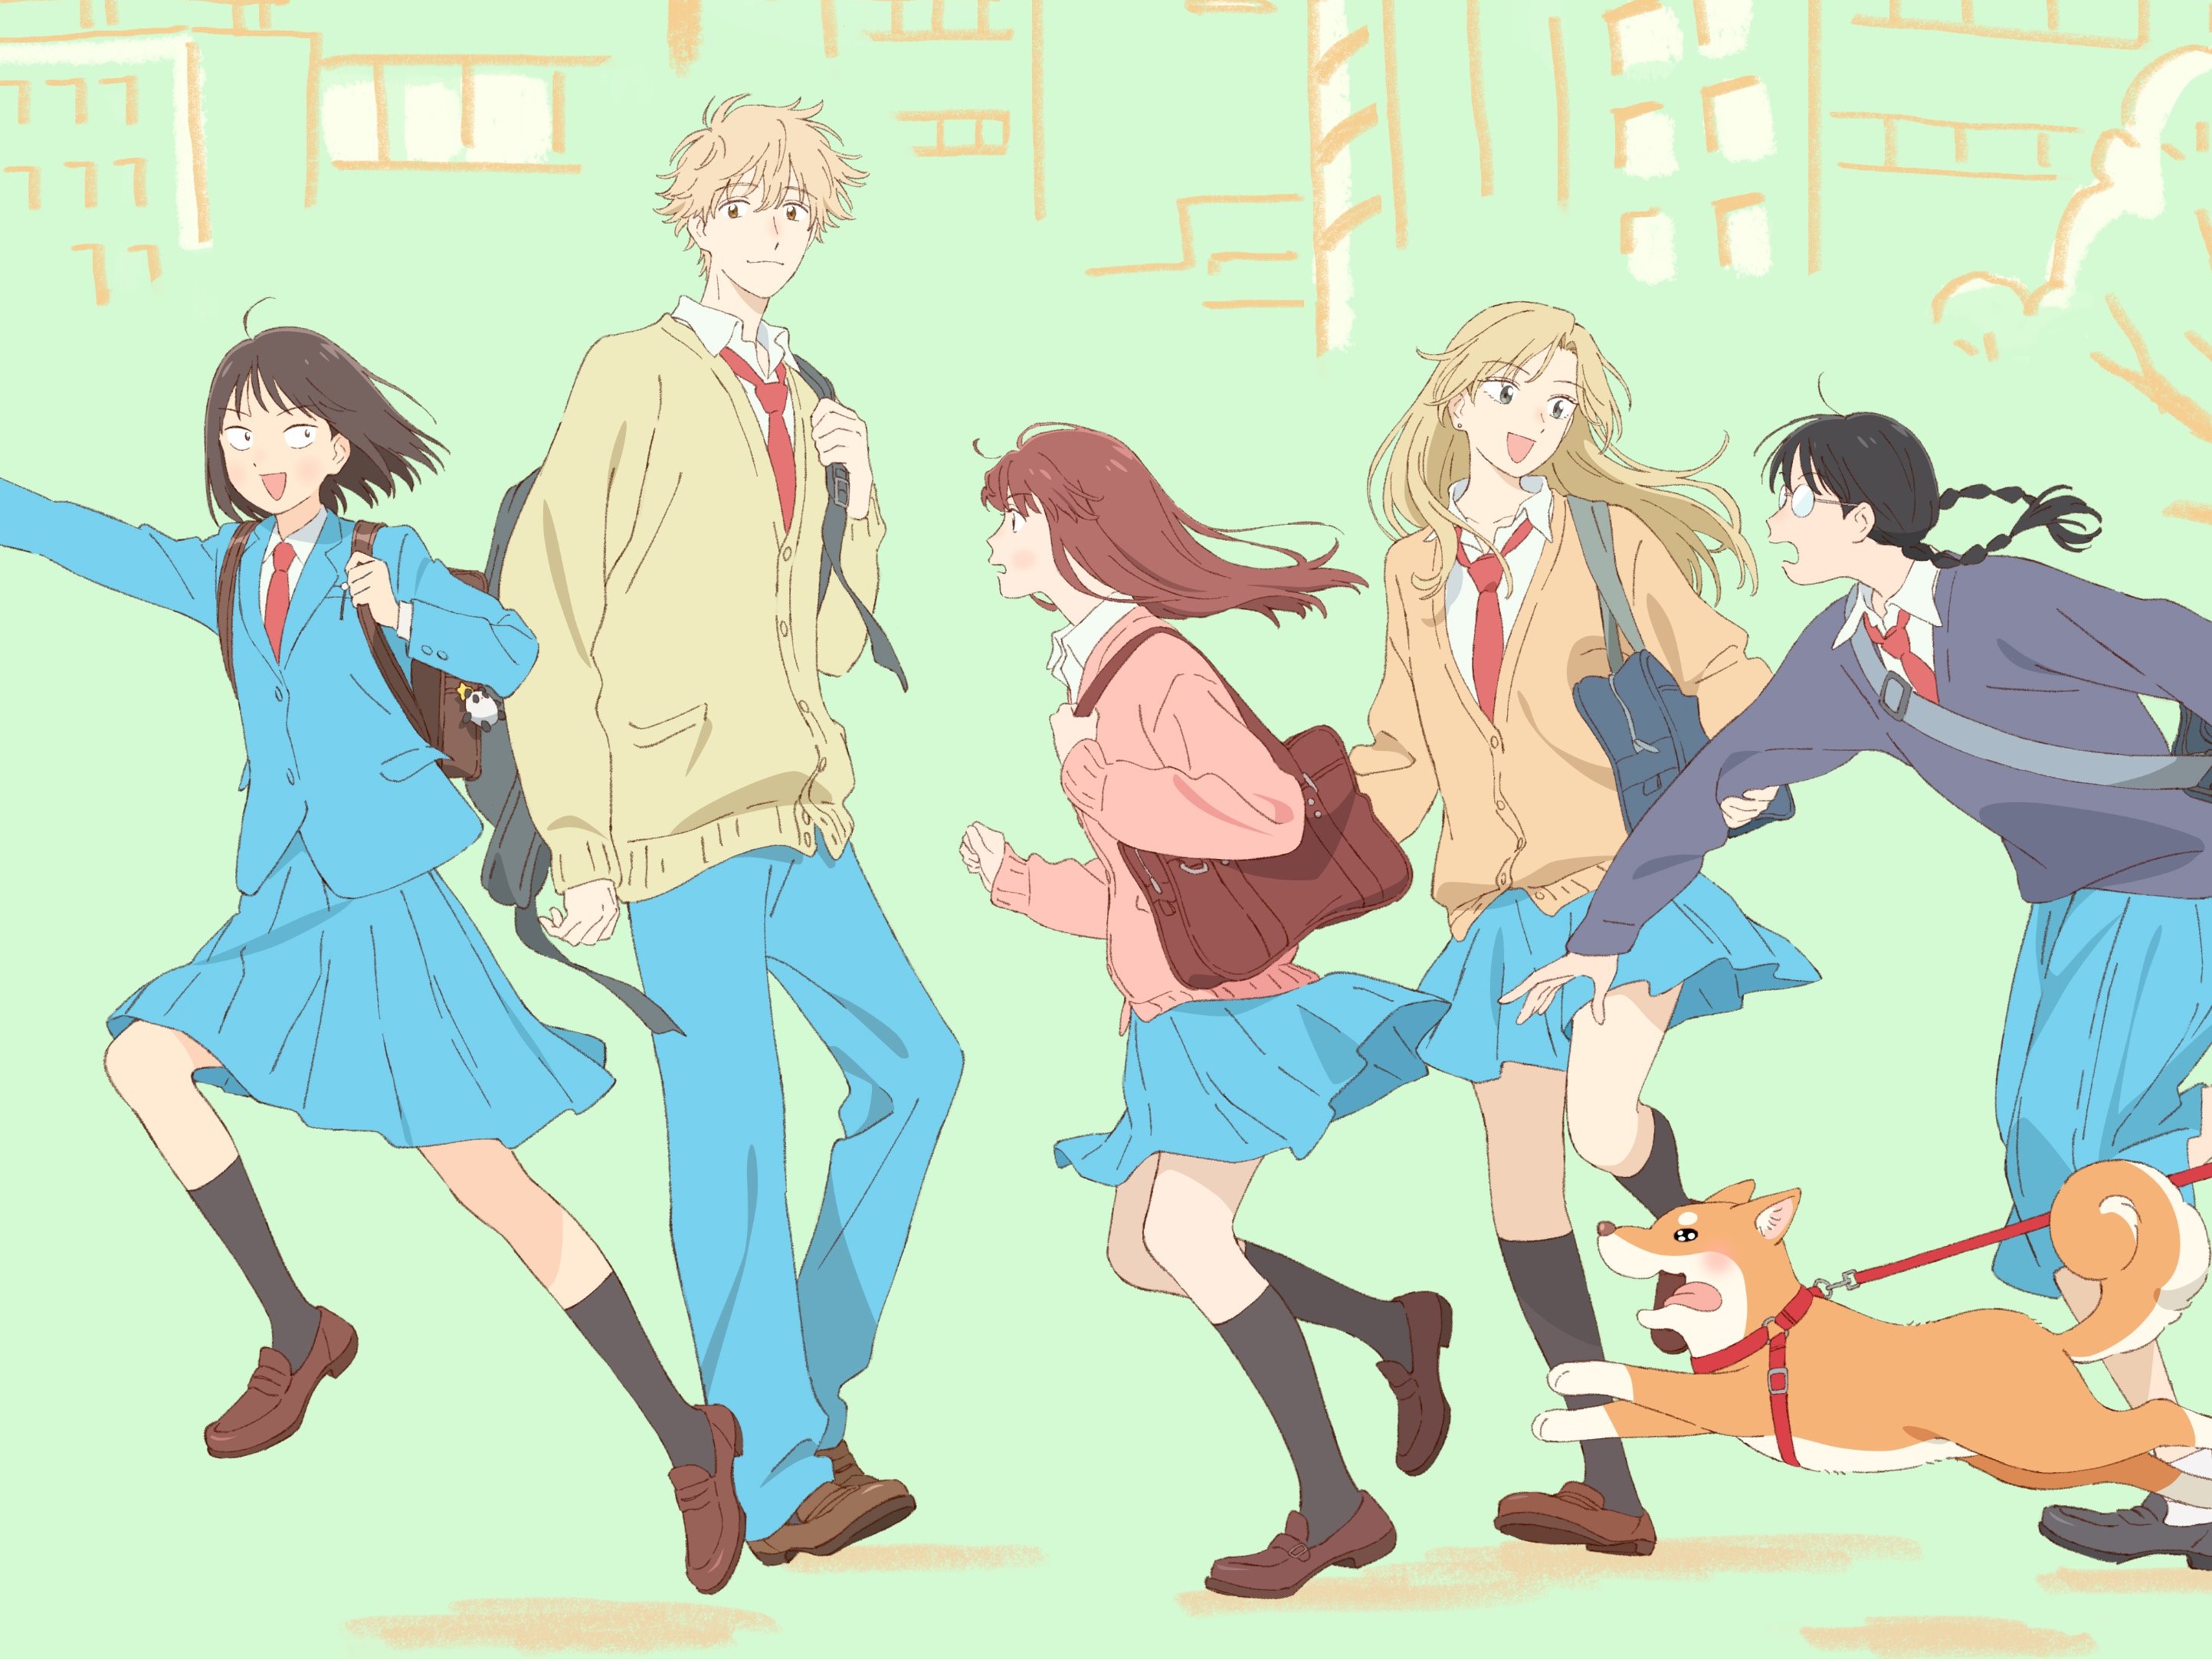 Skip to Loafer (Skip and Loafer) Image by Moshimoshibe #3941998 - Zerochan  Anime Image Board